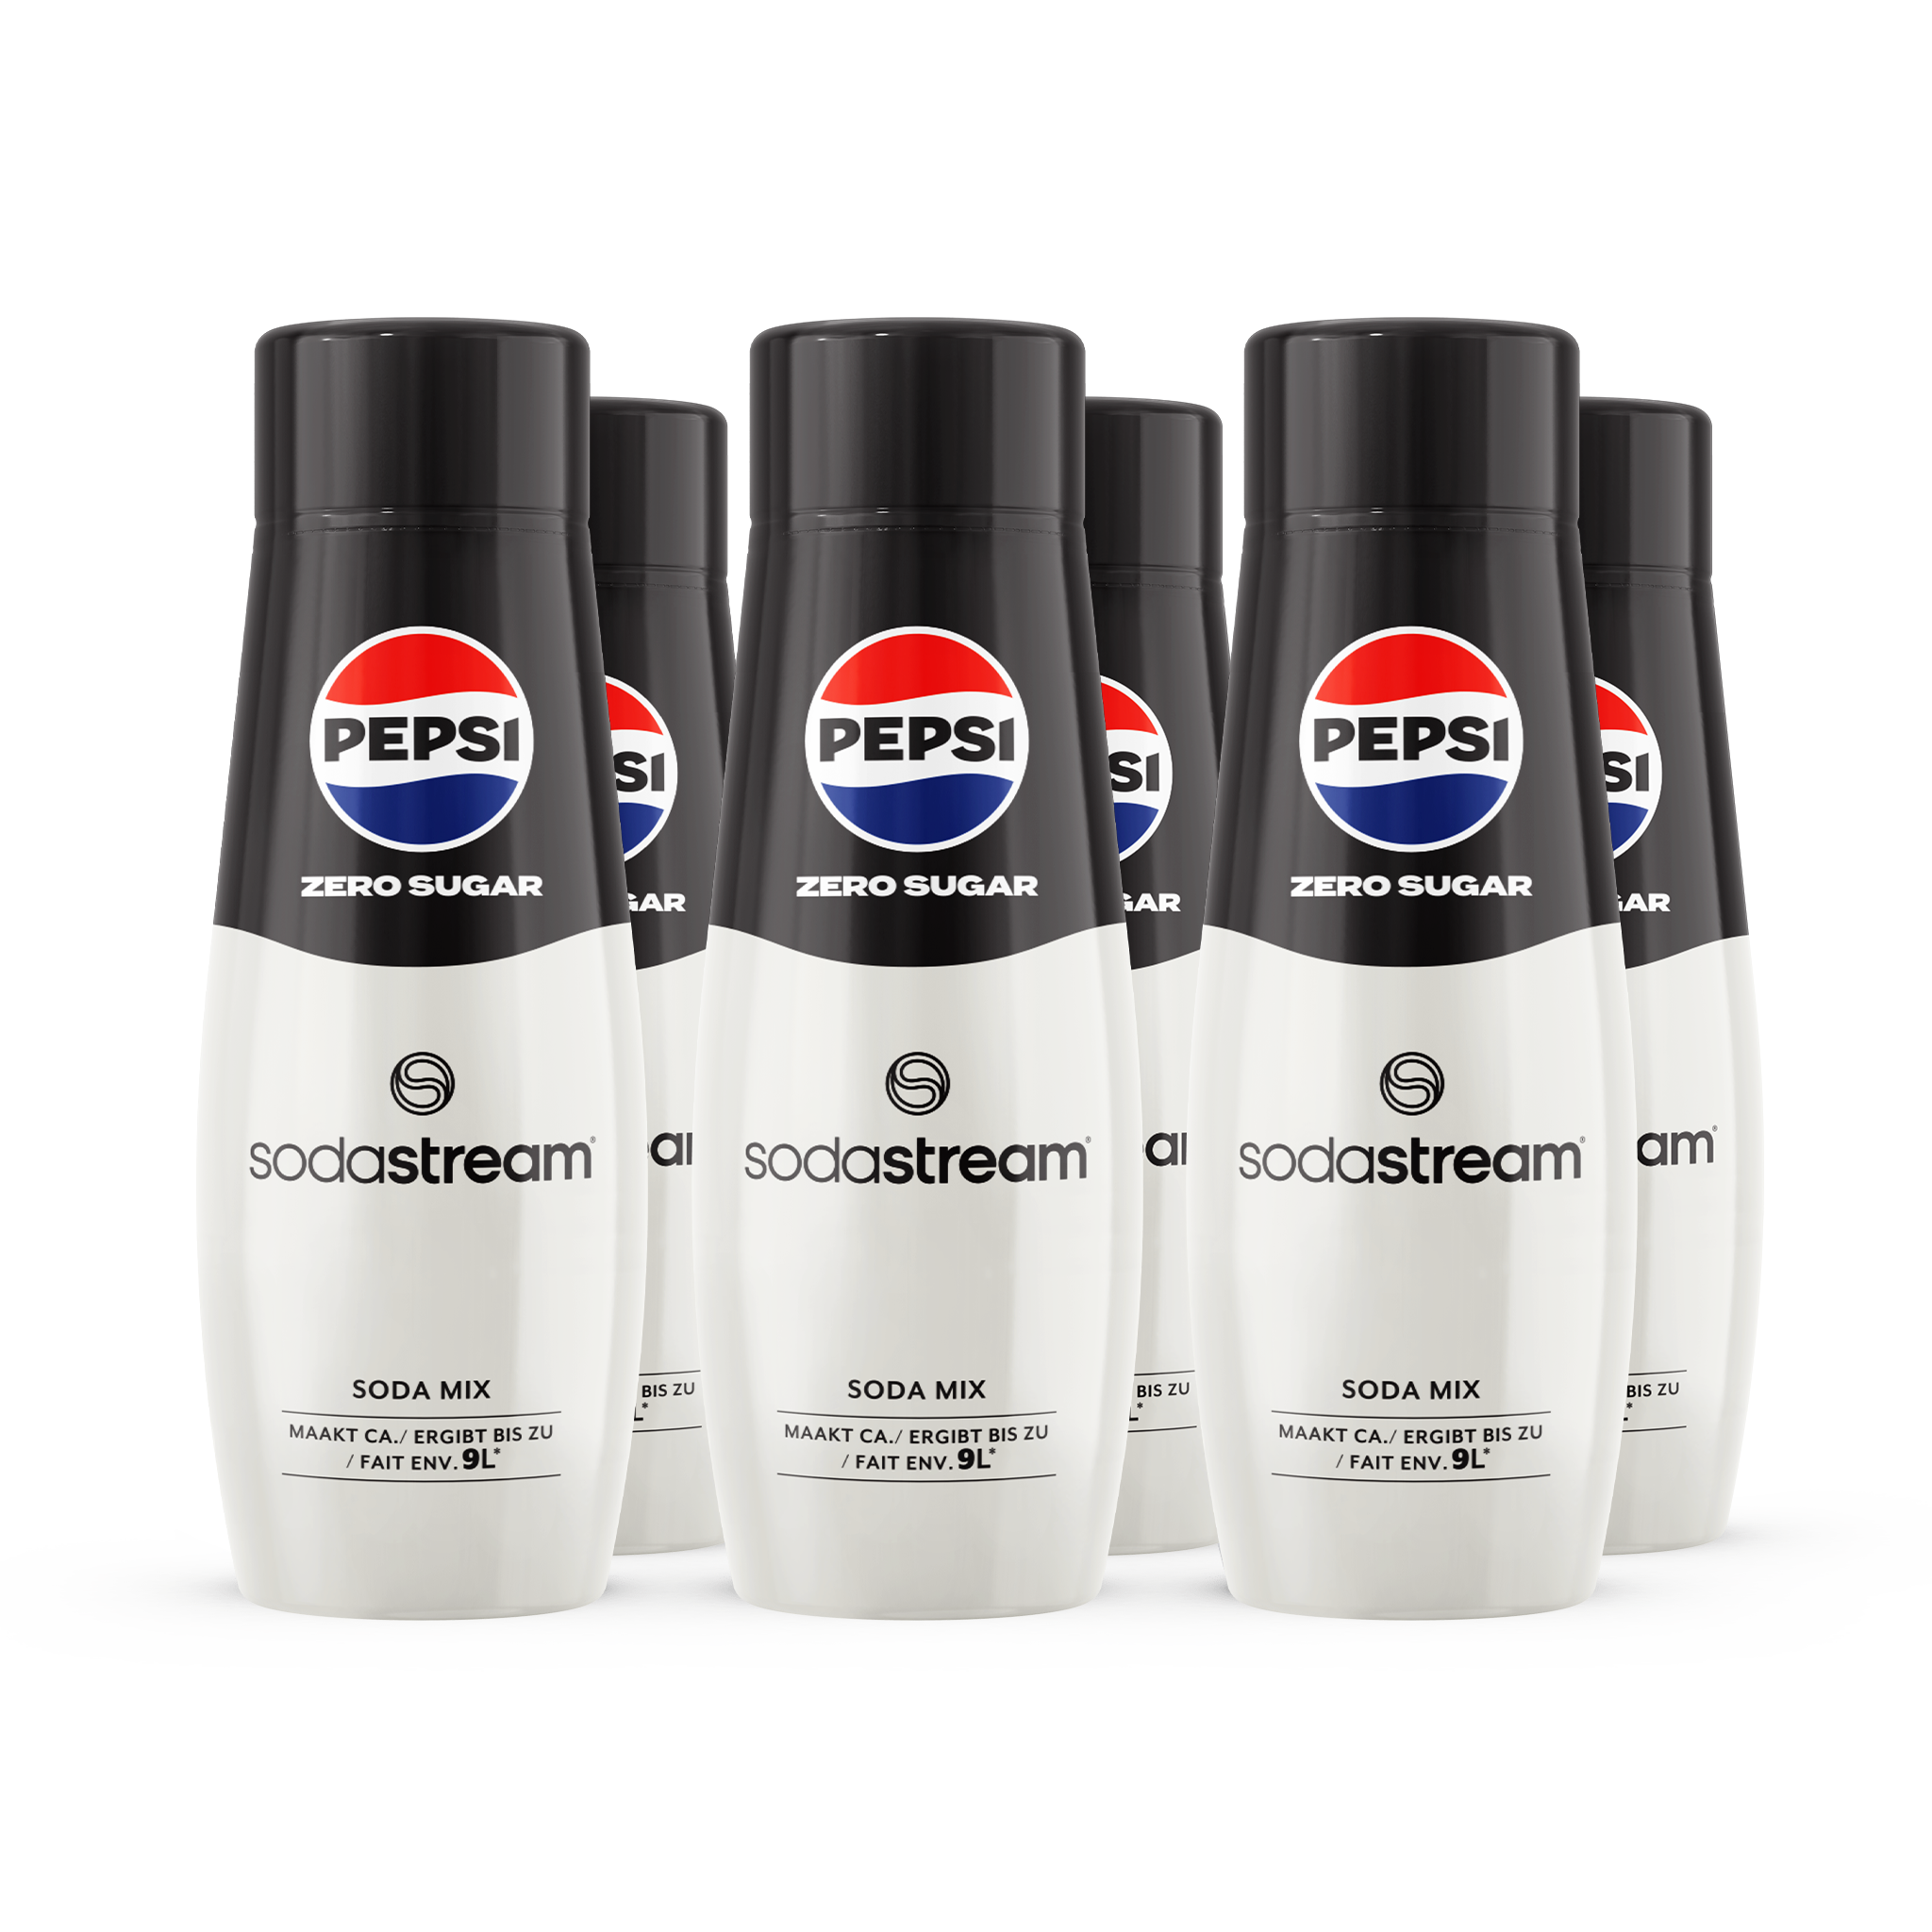 sodastream Pepsi Max 6-pack siroop